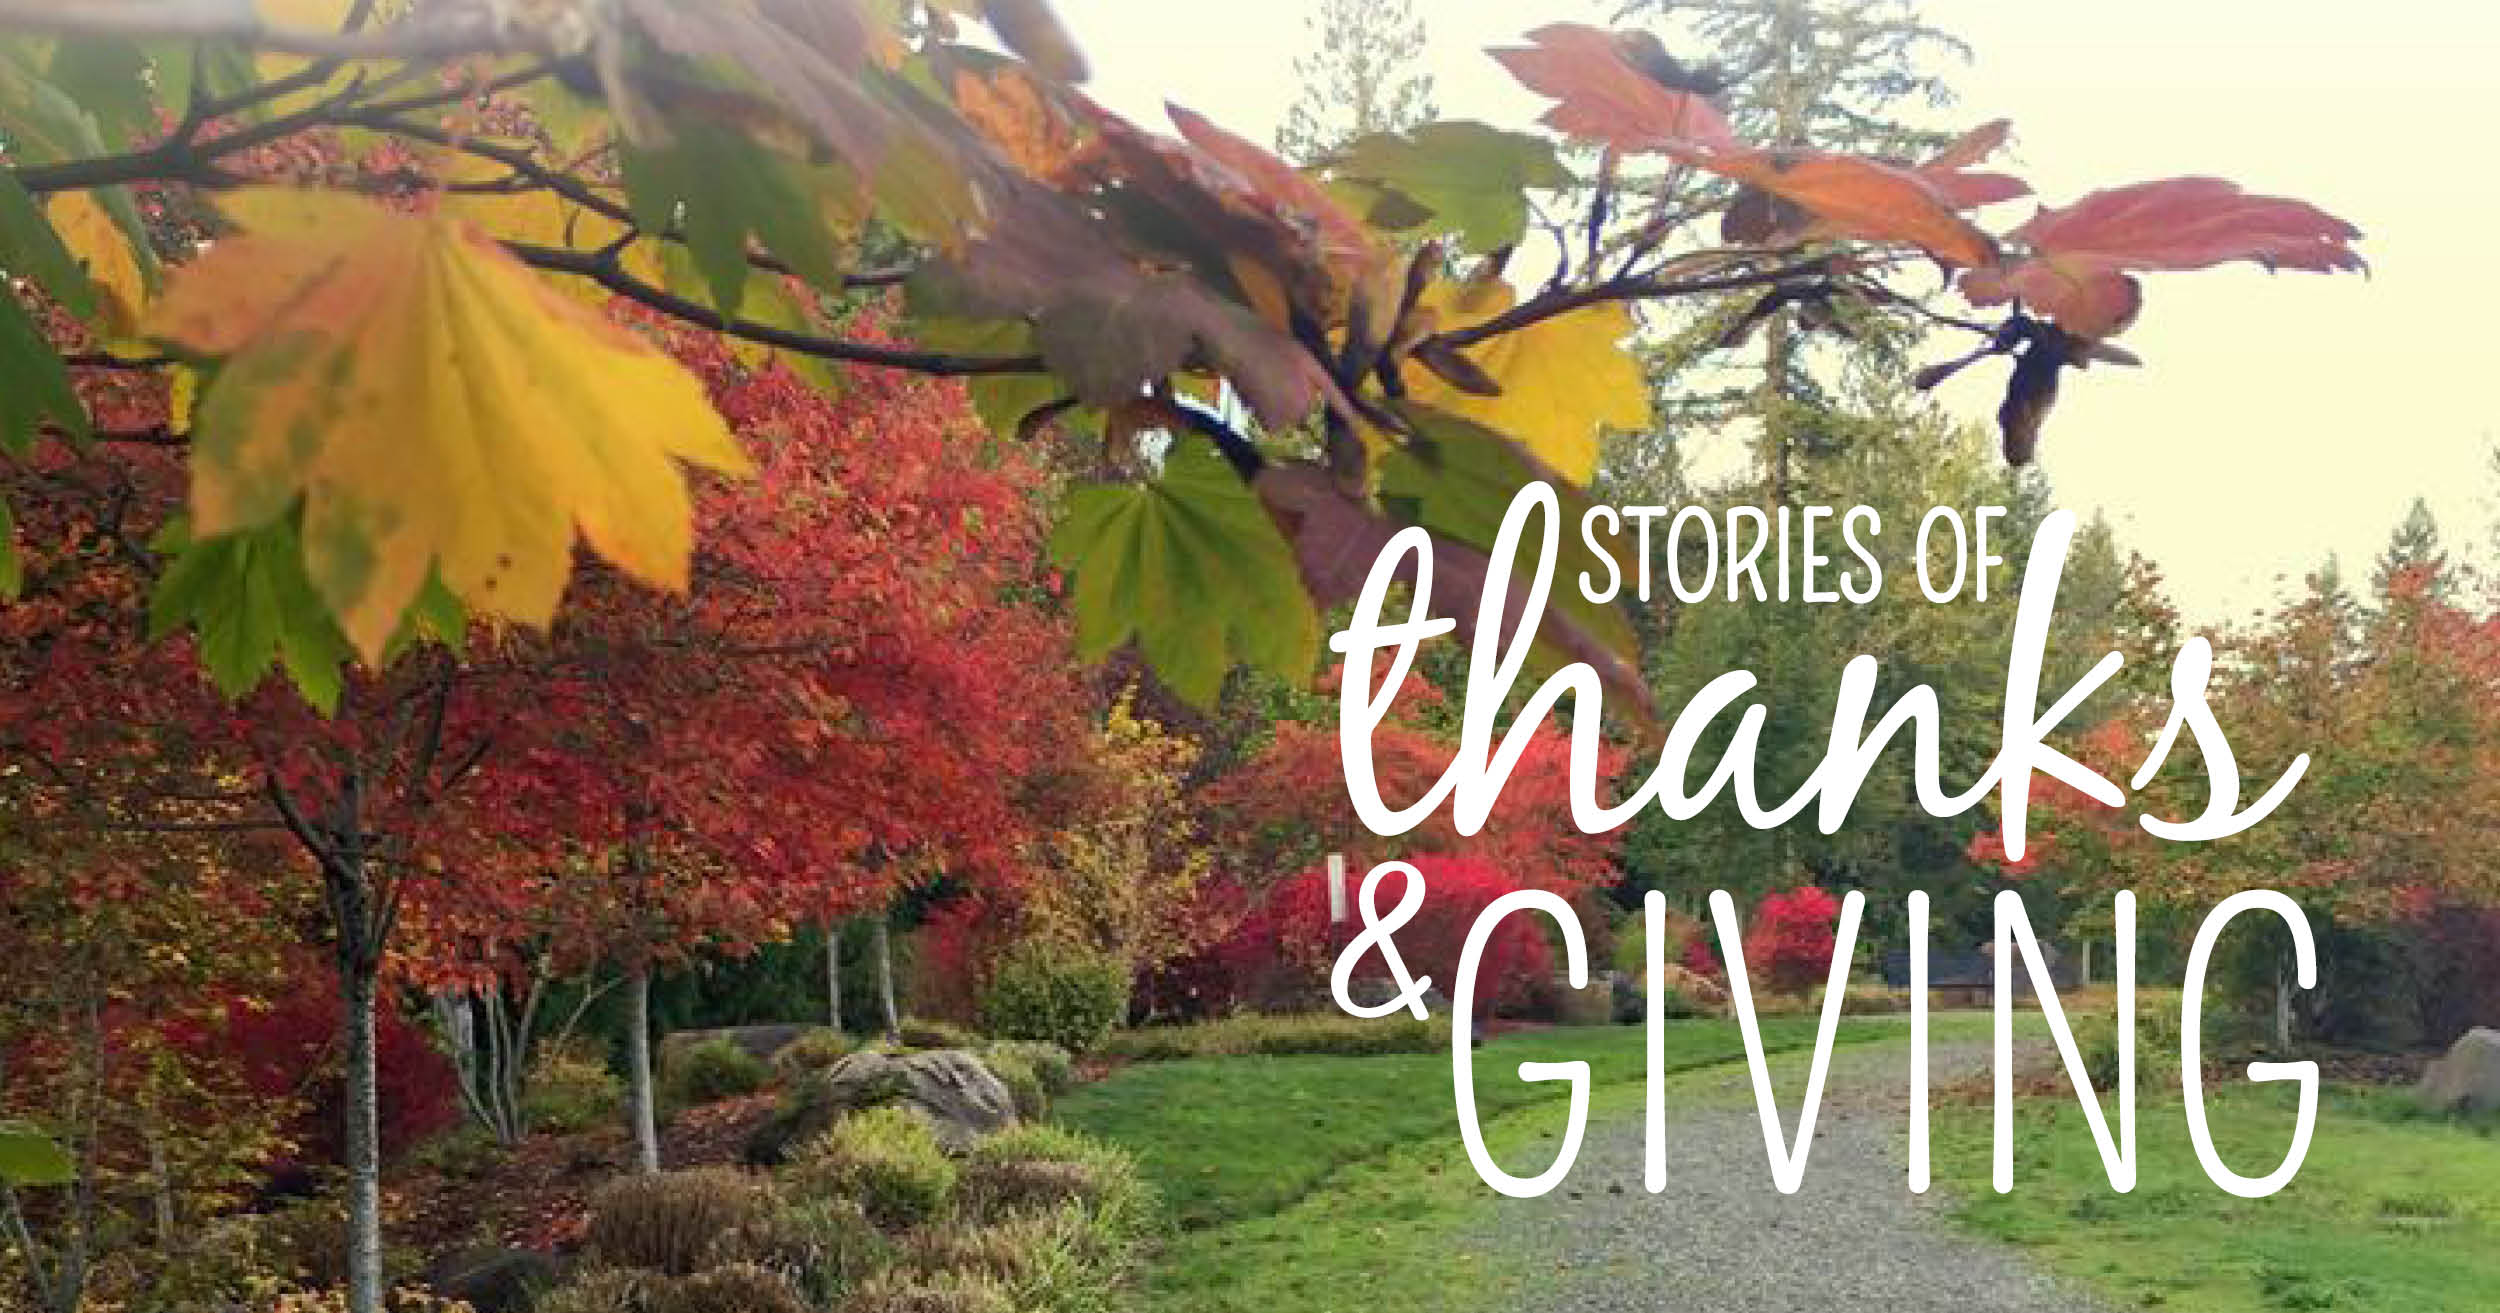 Stories of Thanks & Giving Friendsgiving